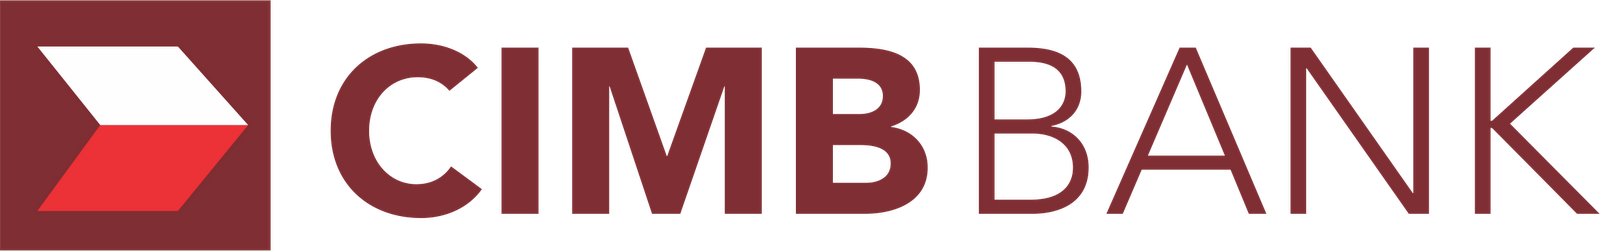 Clients Portfolio - My Website - > - Cimb Bank Logo Png (1600x251)